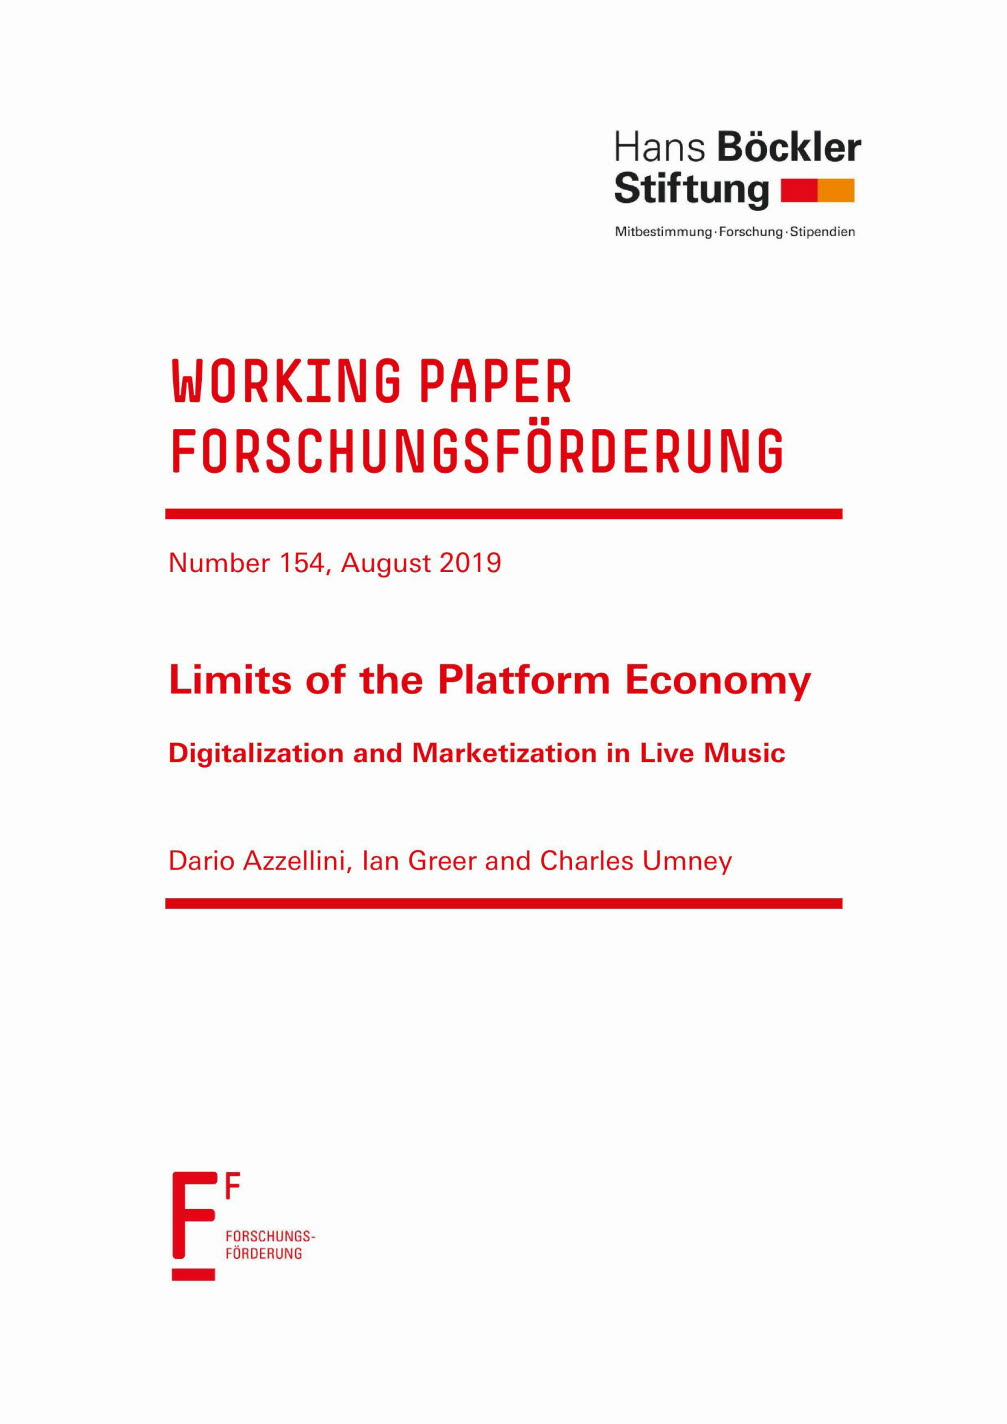 Limits of the platform economy